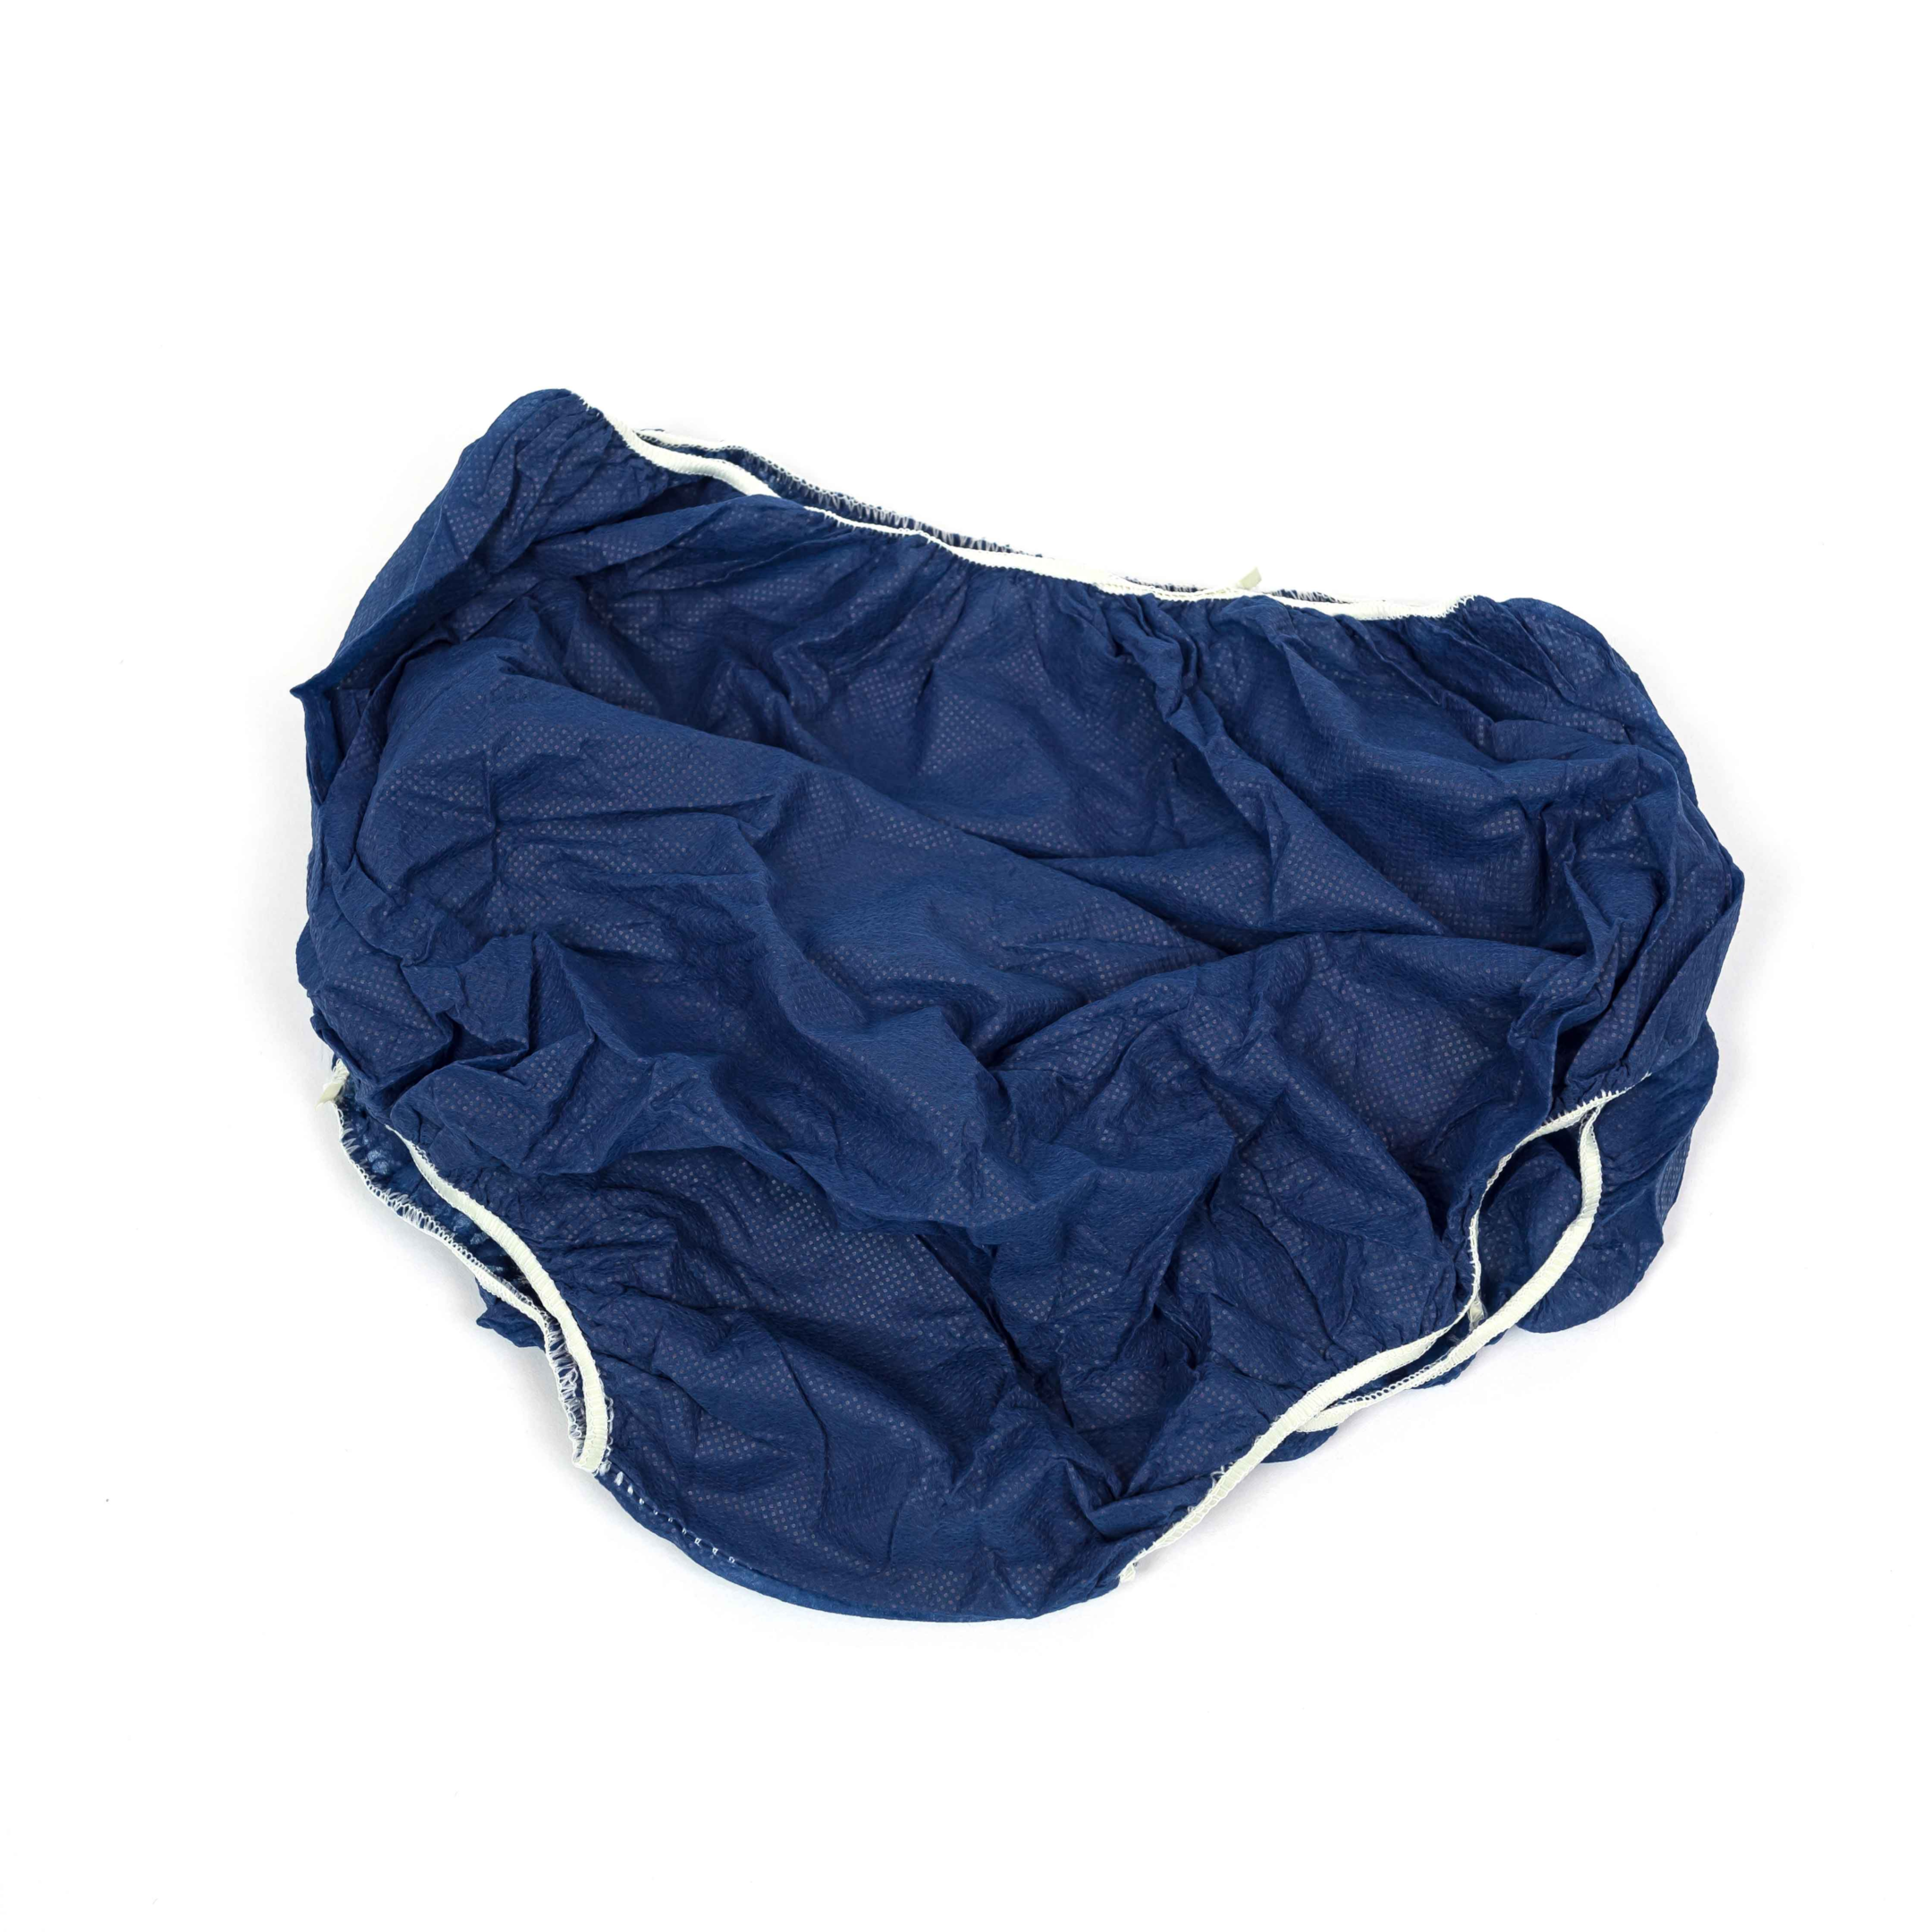 postpartum disposable mesh underwear wholesale, China mesh